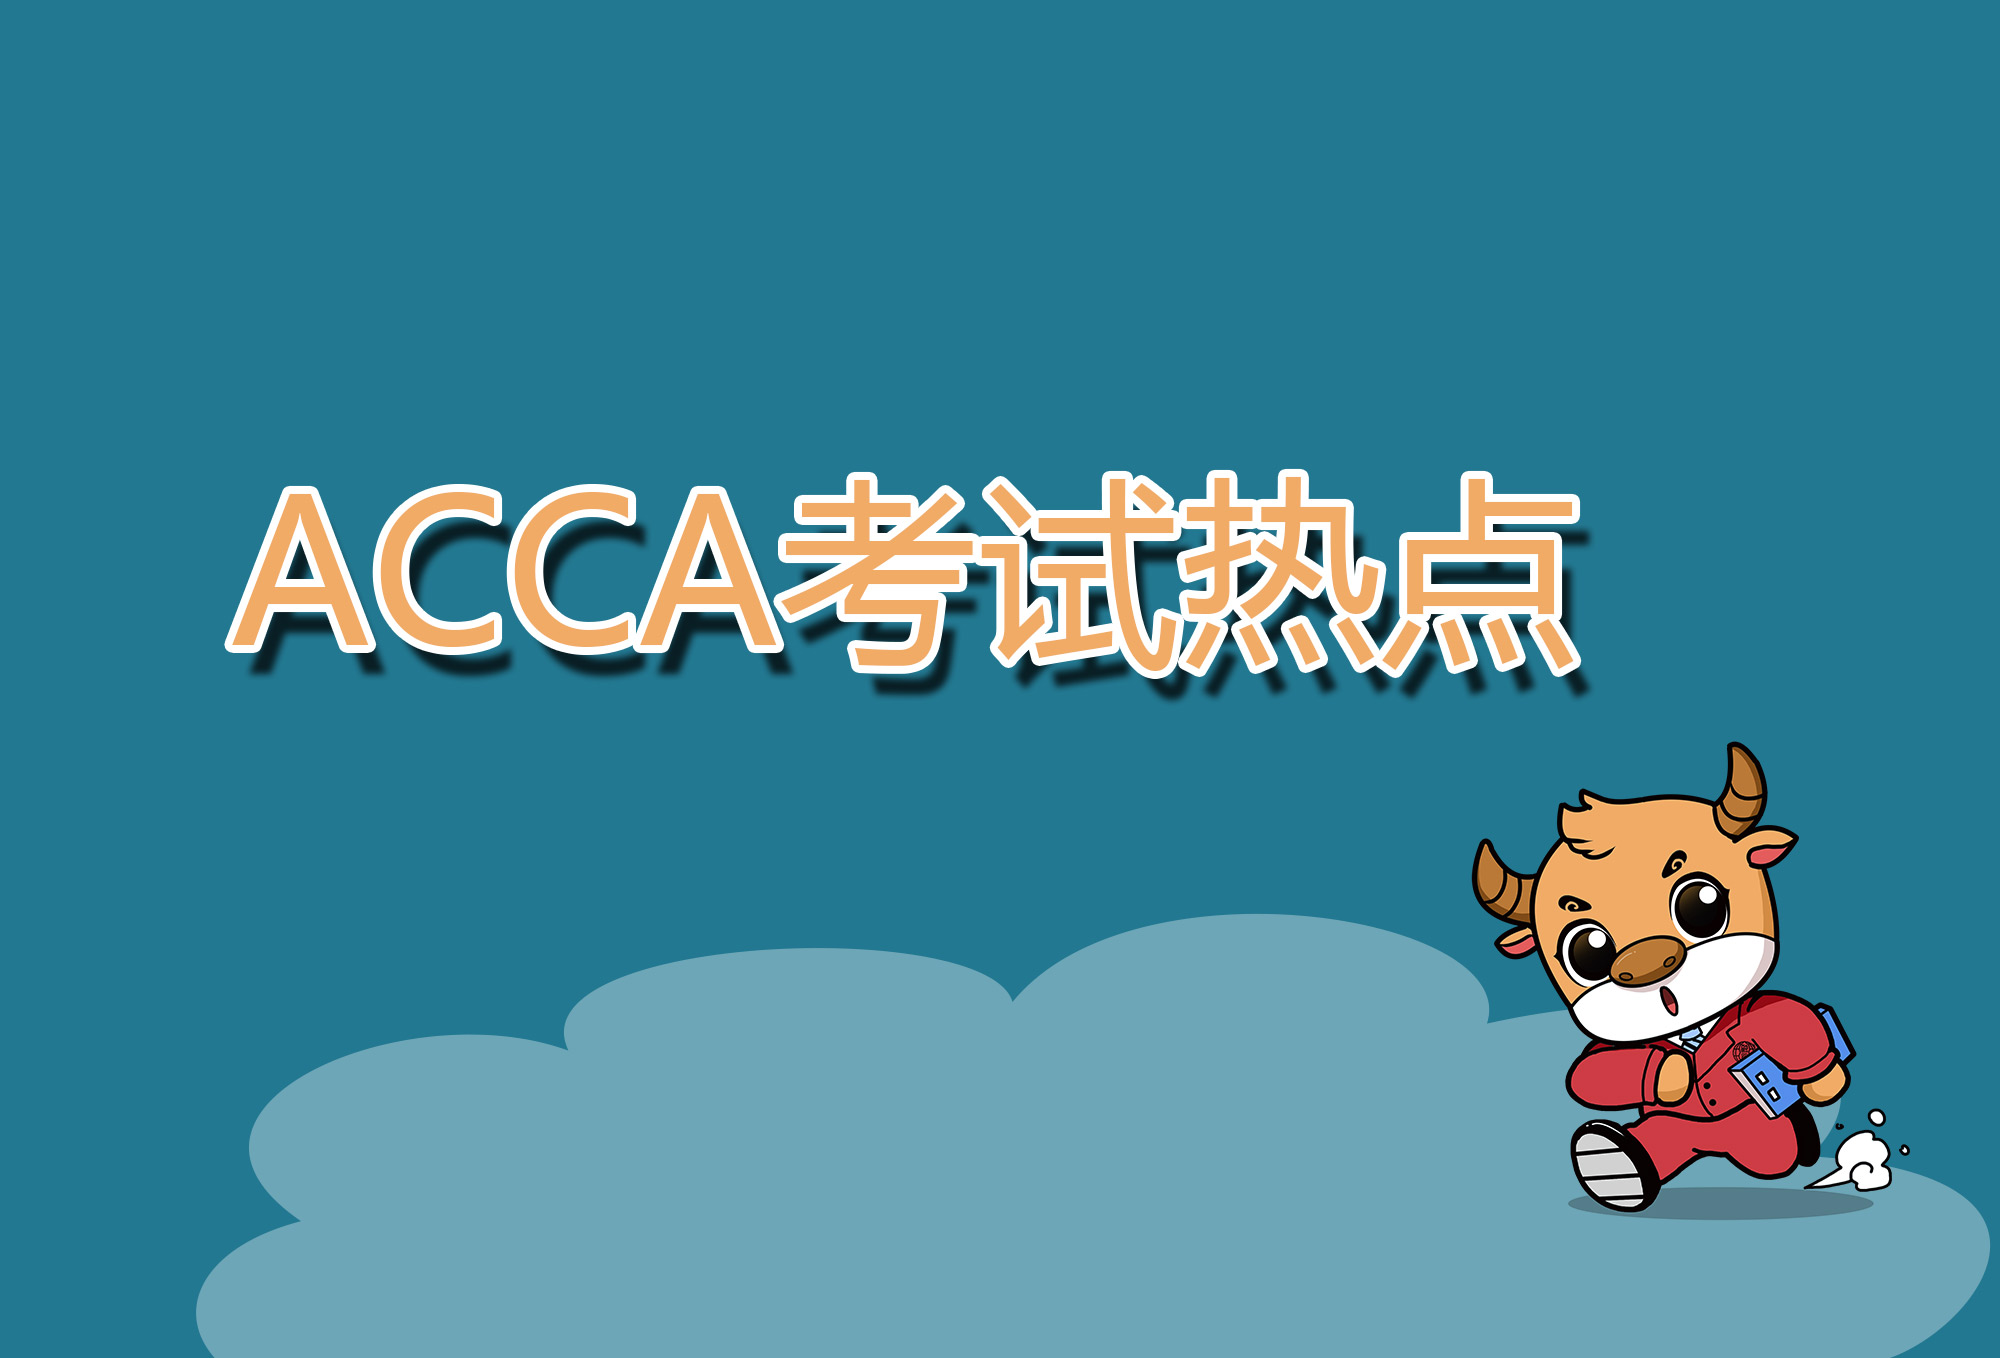 ACCA考试知识点账户account的分类有哪些？